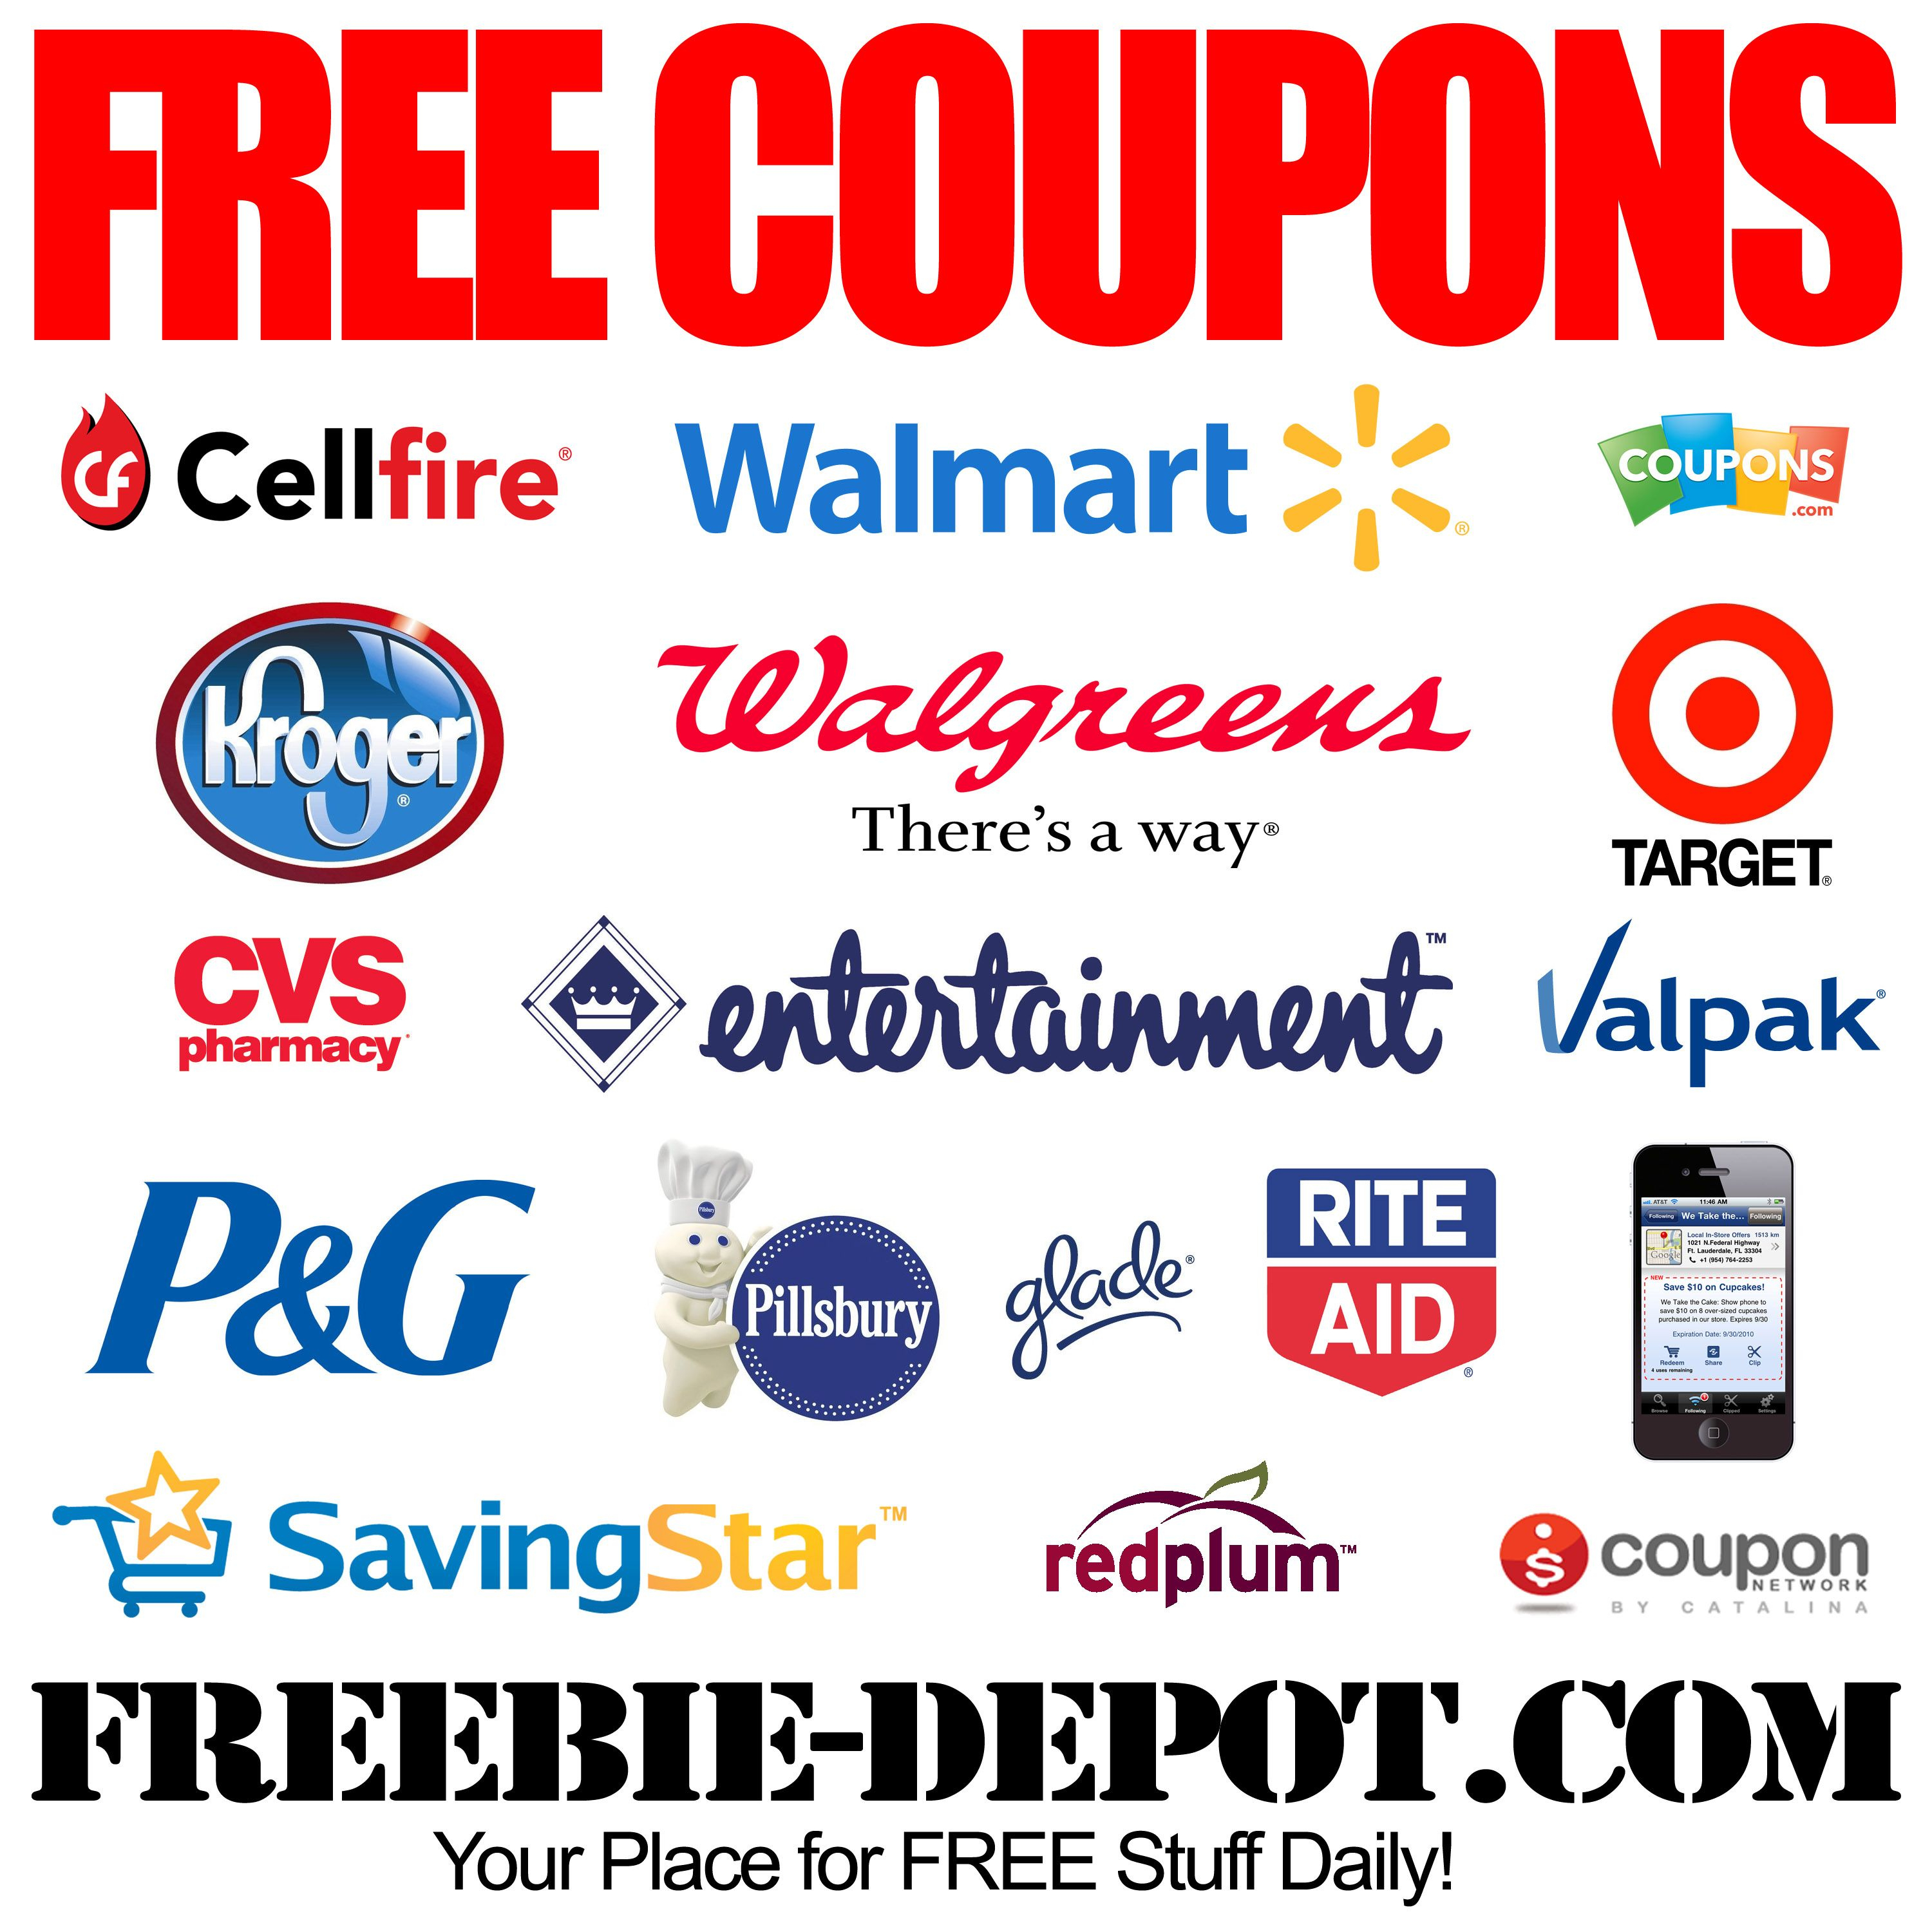 Free Coupons - Free Printable Coupons - Free Grocery Coupons - Free Printable Beer Coupons